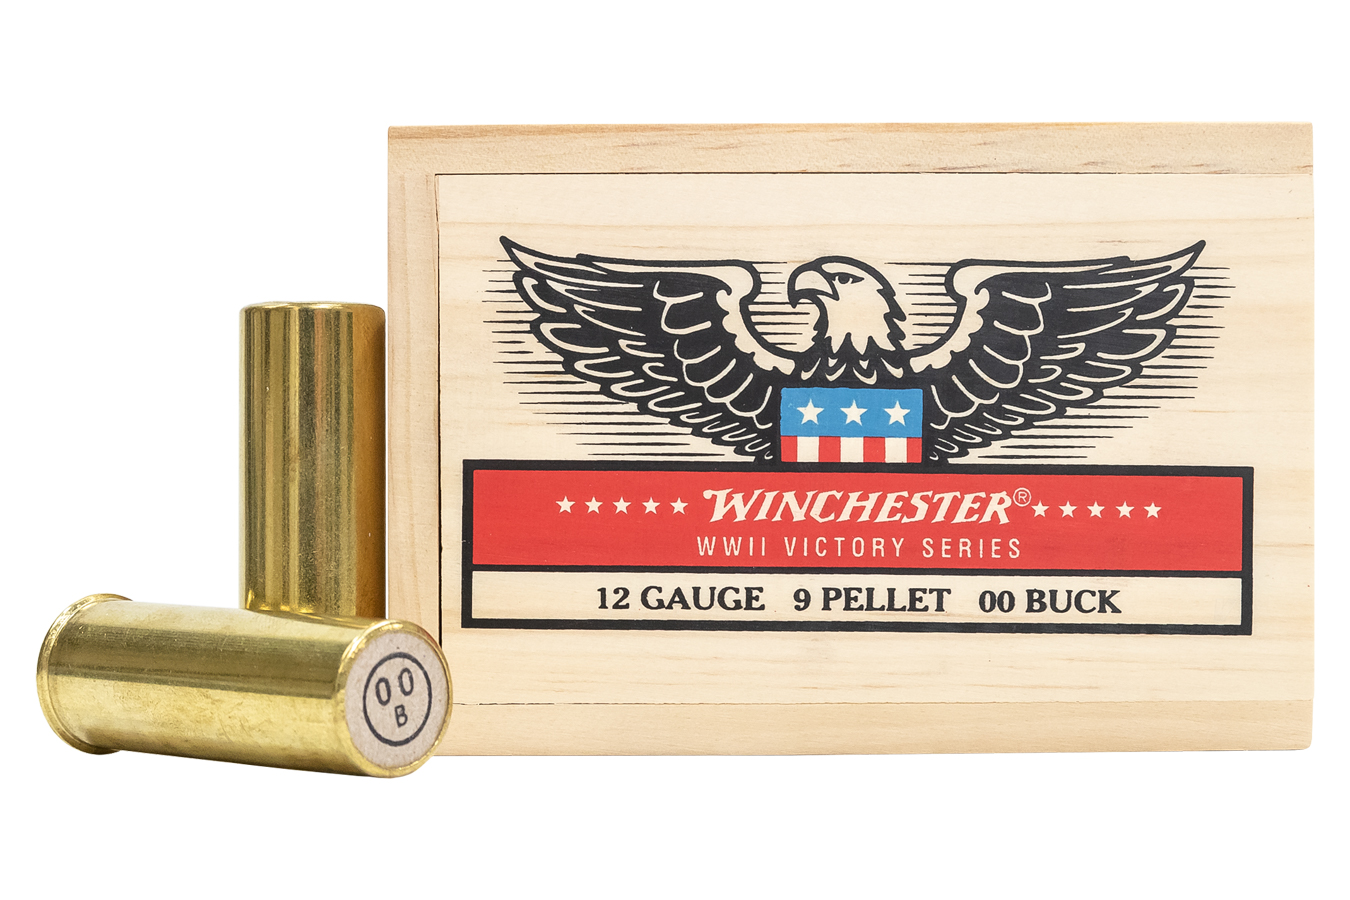 Winchester 12 Gauge Brass 9 Pellet 00 Buck Wwii Victory Series M19